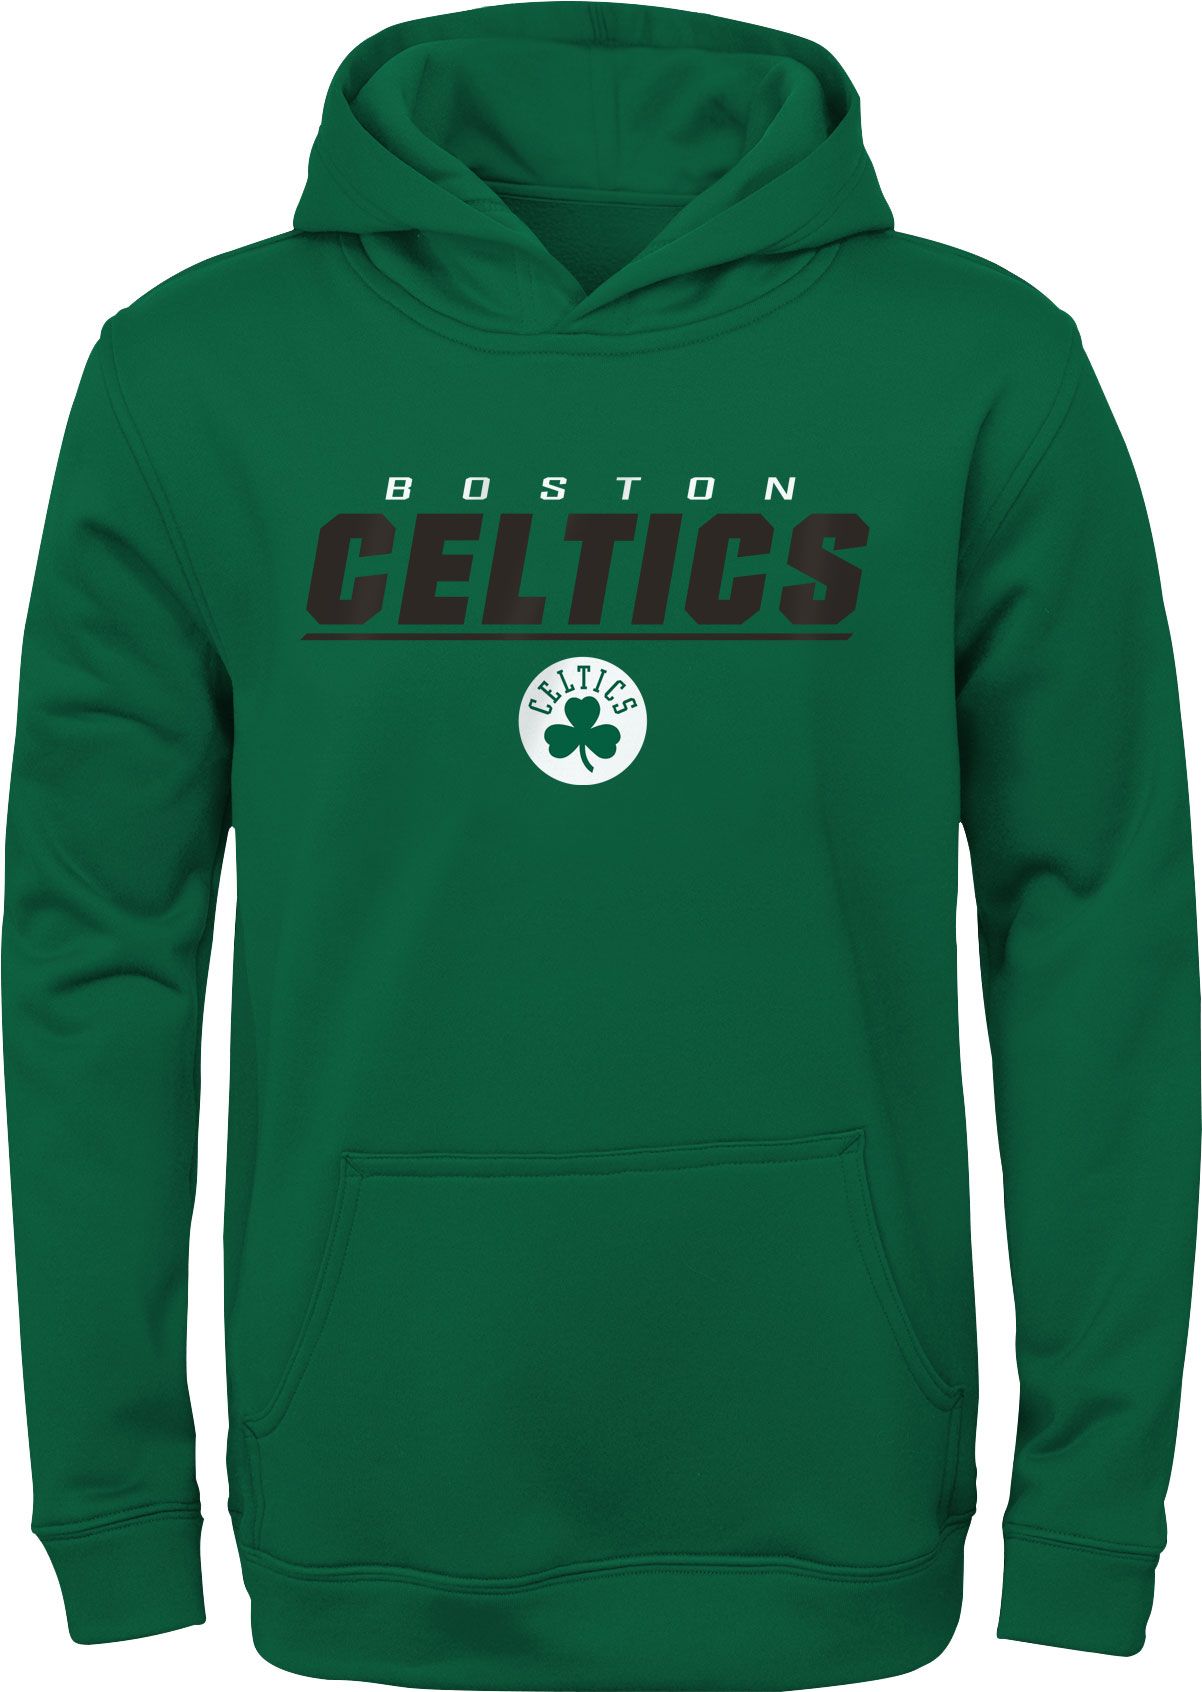 boston celtics youth apparel